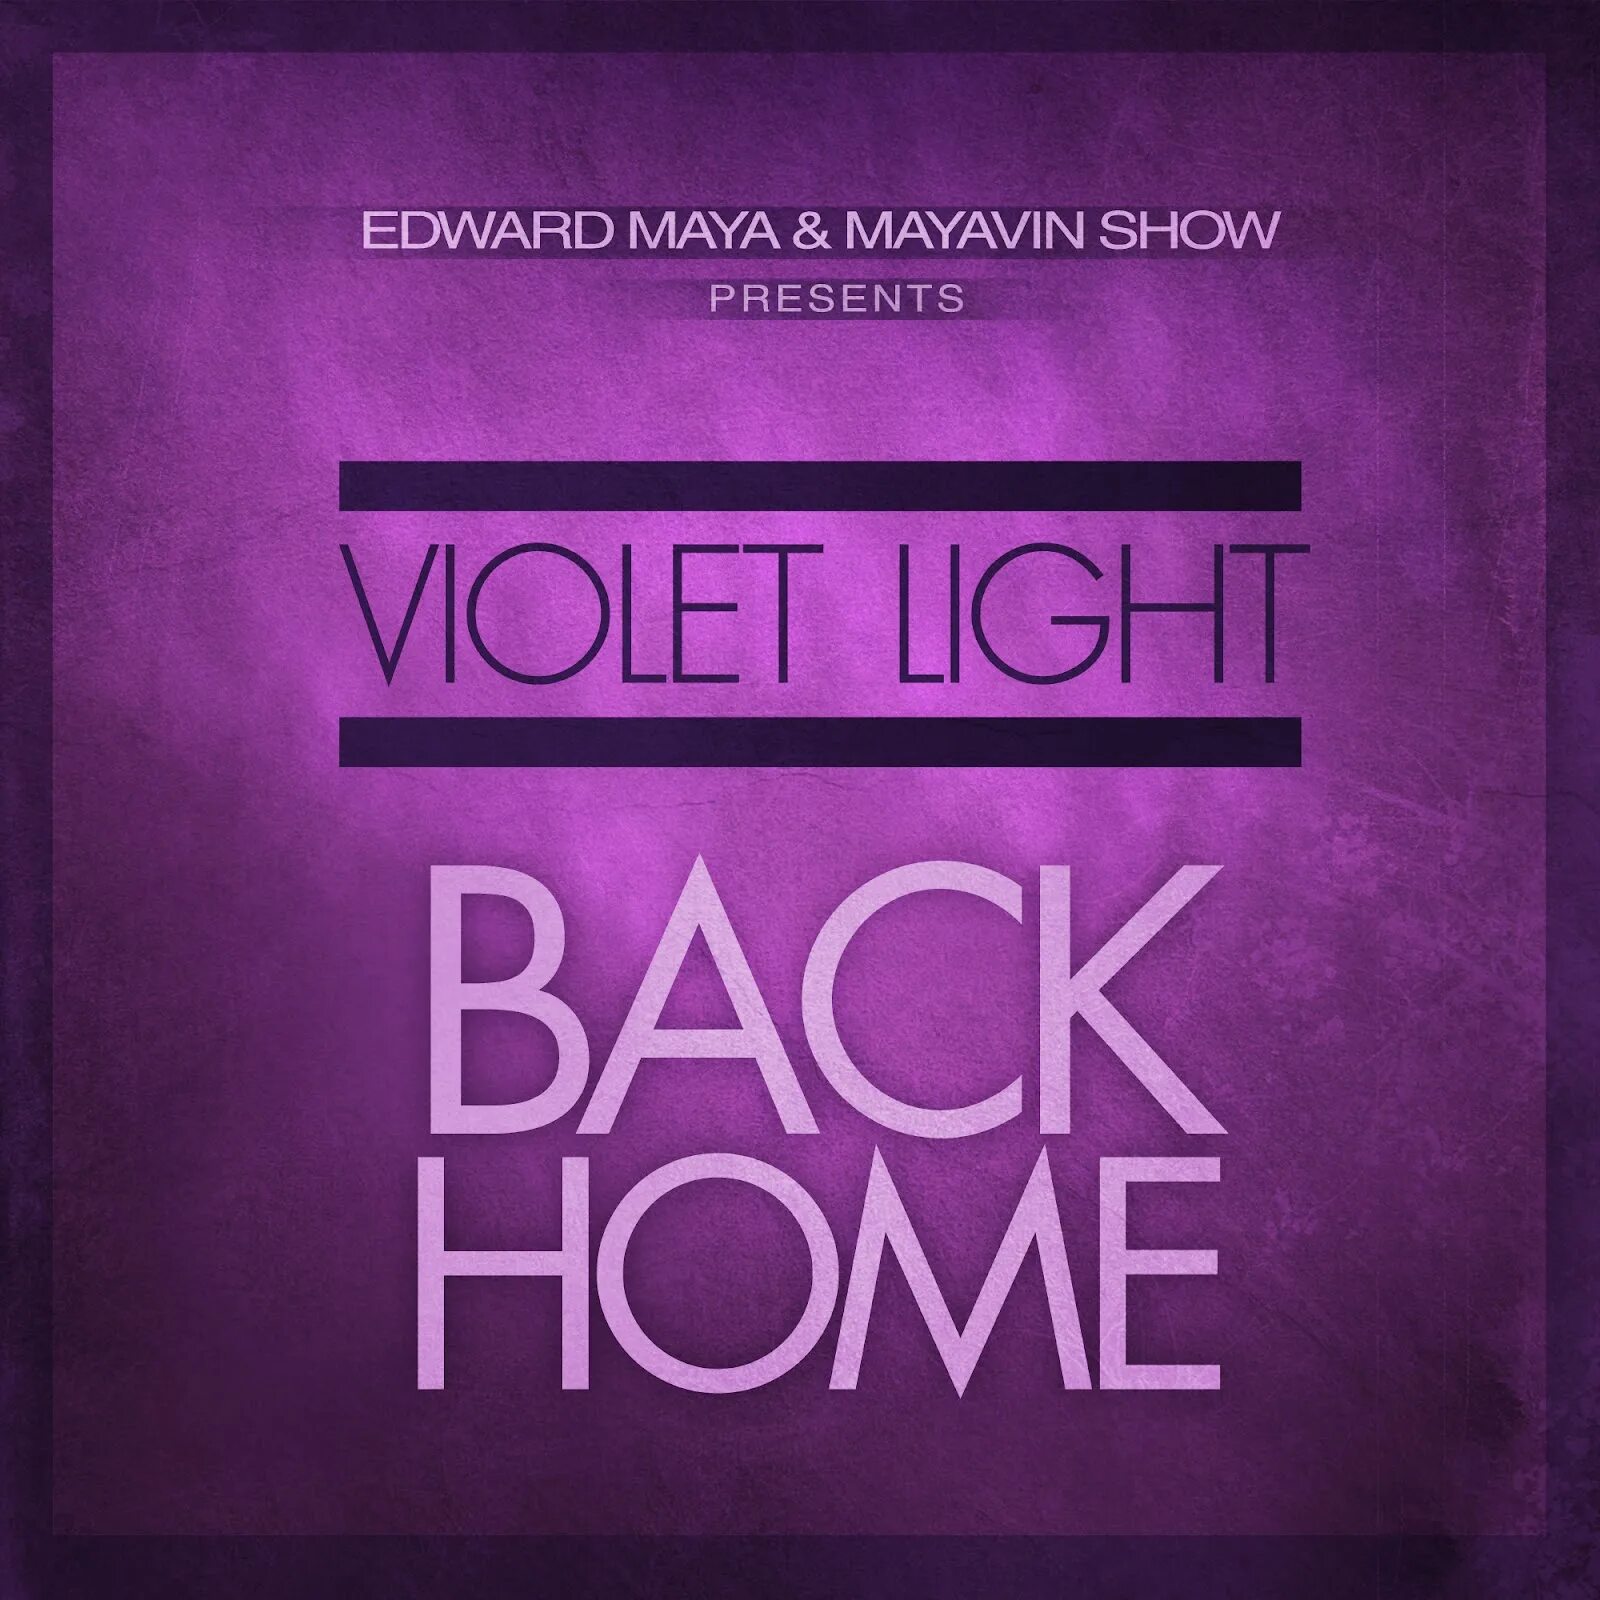 Back Home. Edward Maya Violet Light. Edward Maya back Home. Edward Maya 2022. Going back песня